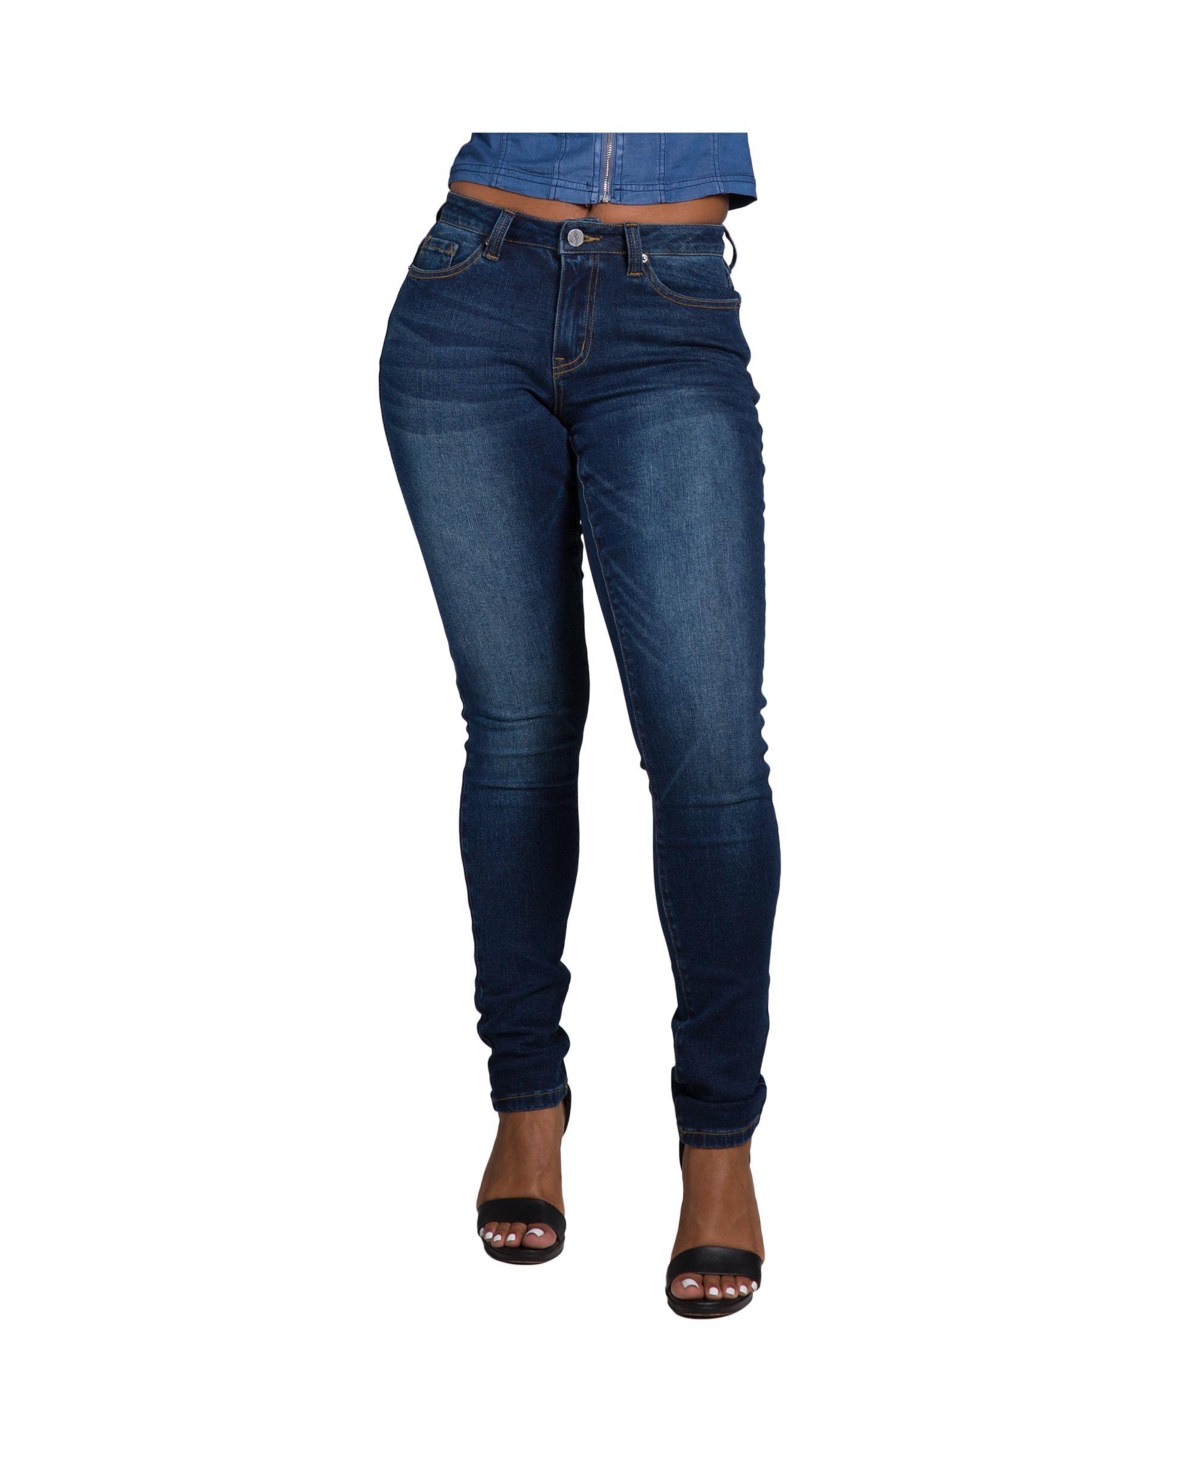 Women's Curvy Fit High Rise Stretch Denim Skinny Jeans - Dark blue